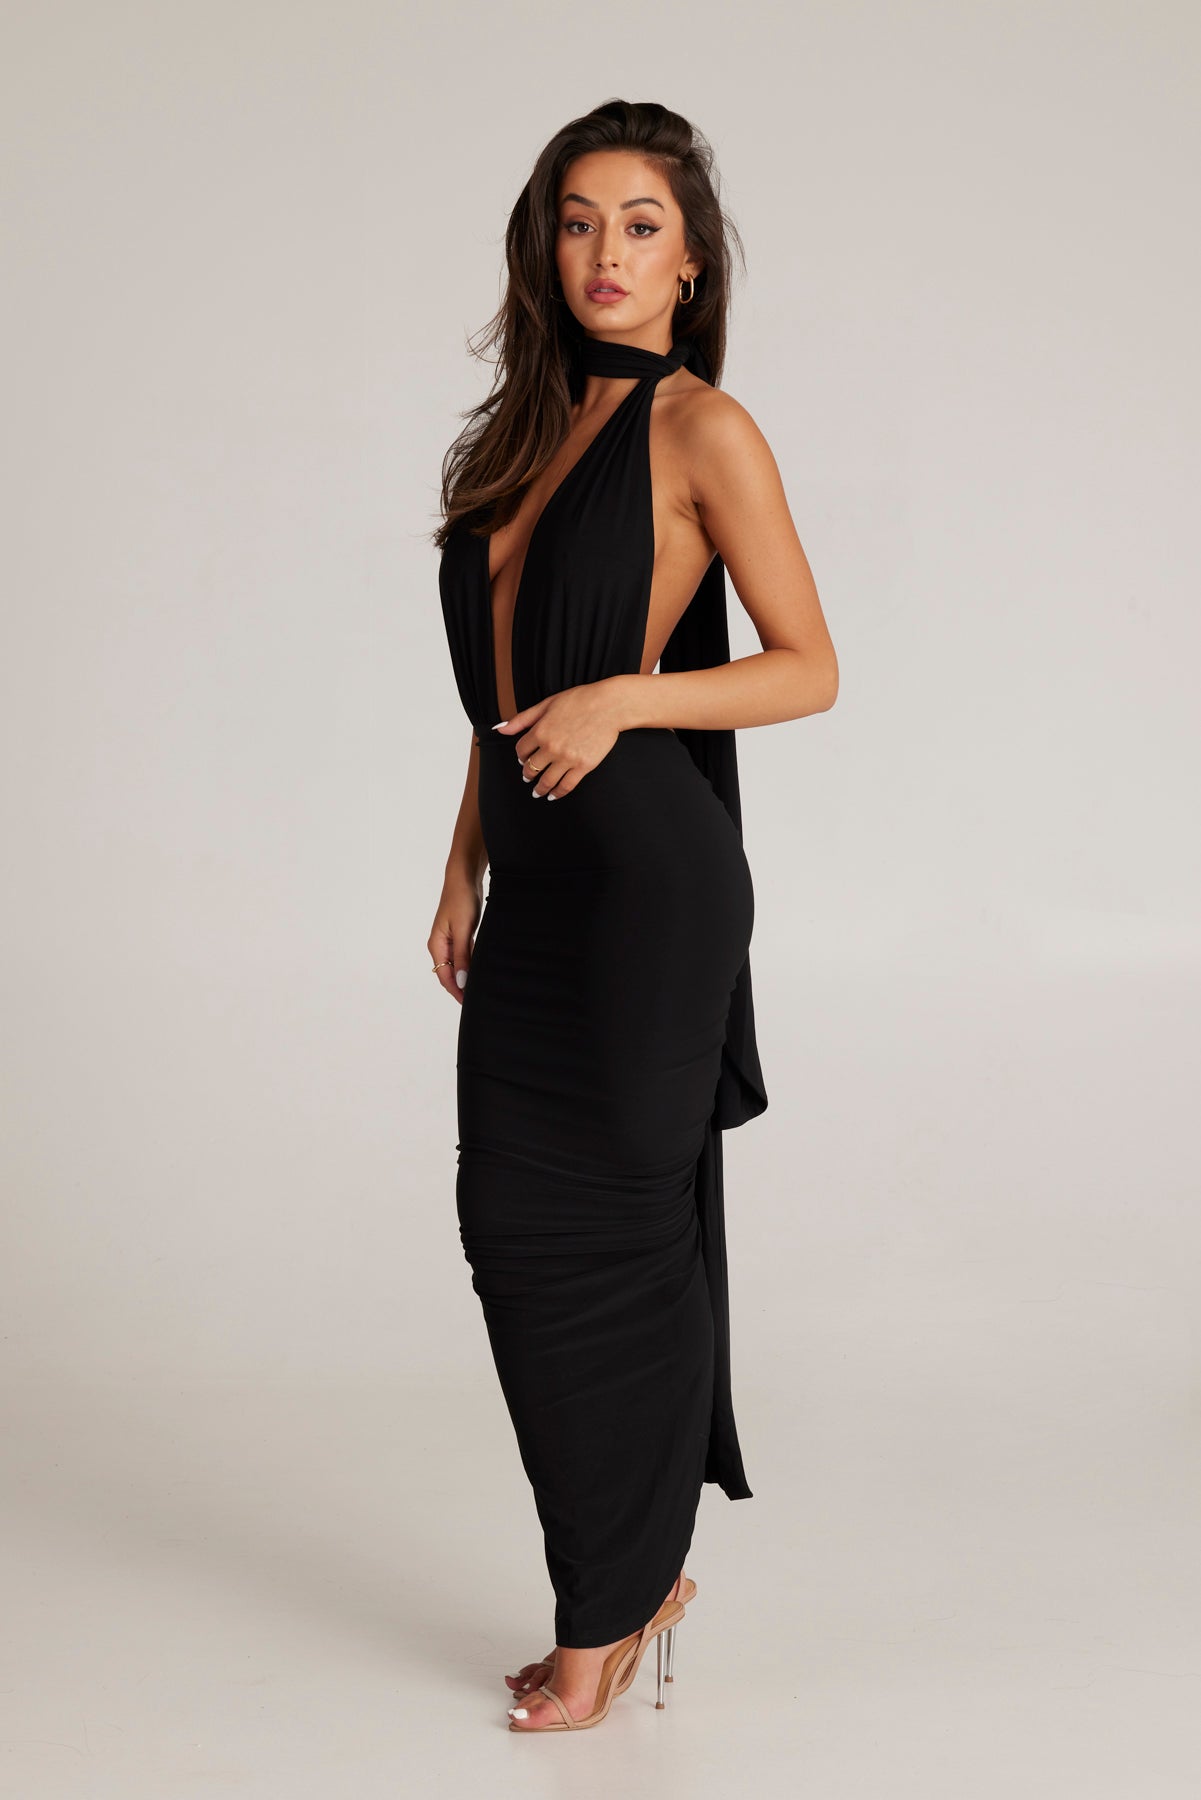 MÉLANI The Label MELROSE Black Multi Tie Plunge Form Fitted Midi Dress